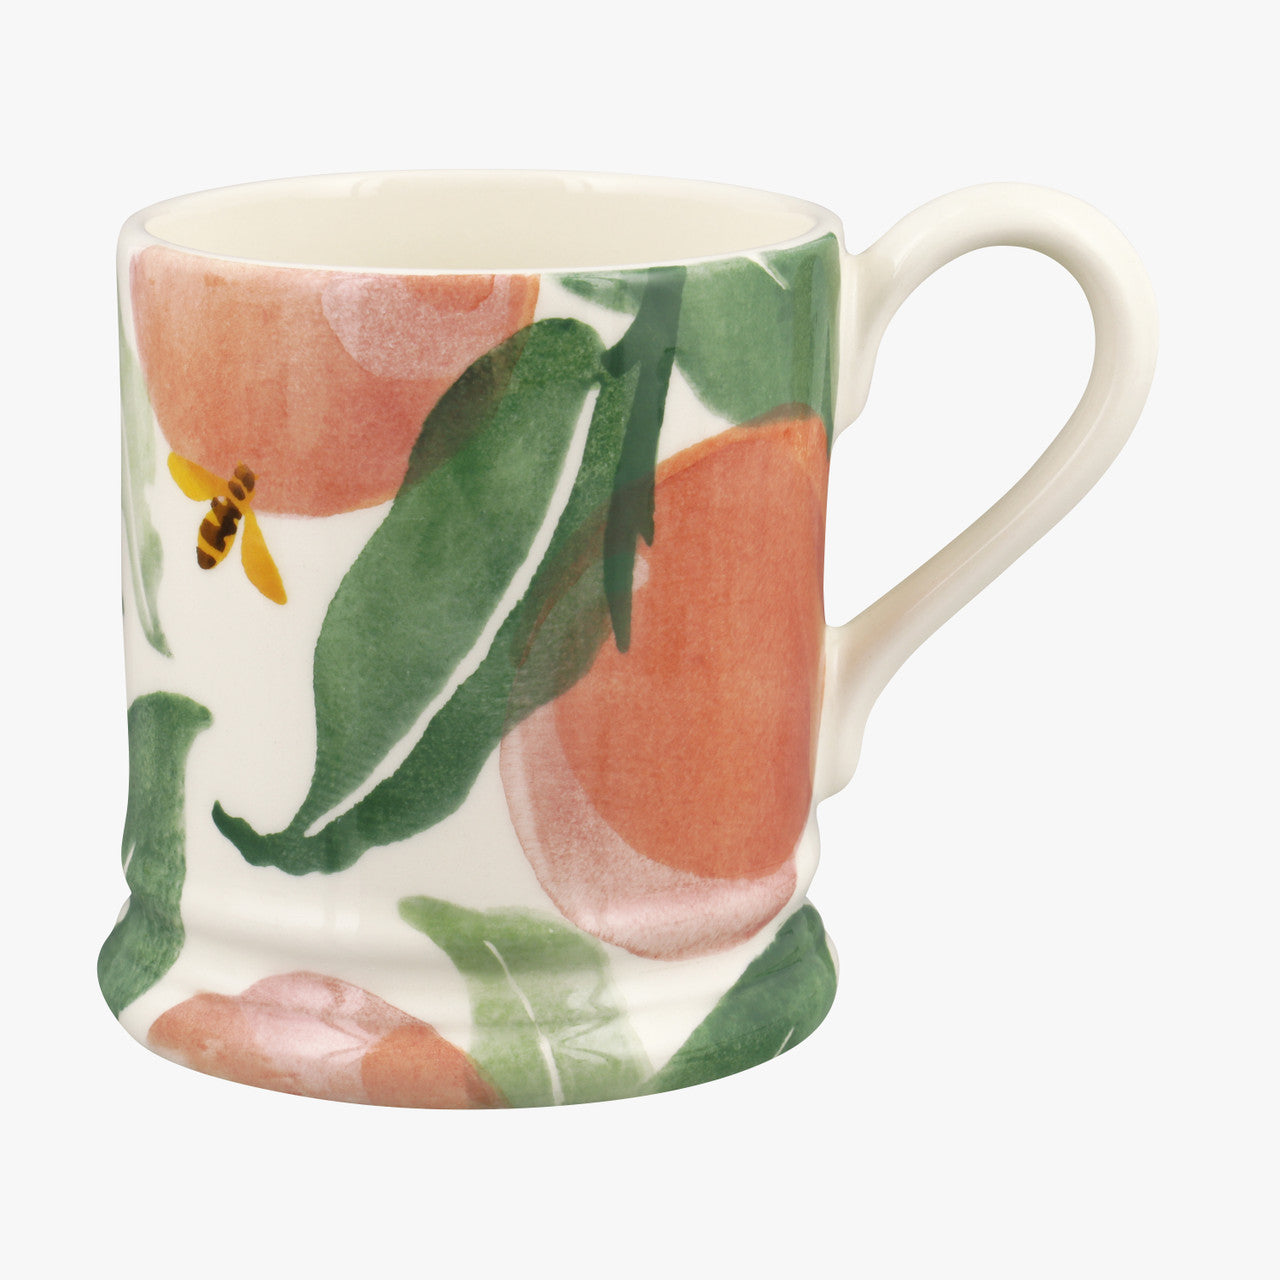 Peaches 1/2 pint mug by Emma Bridgewater.